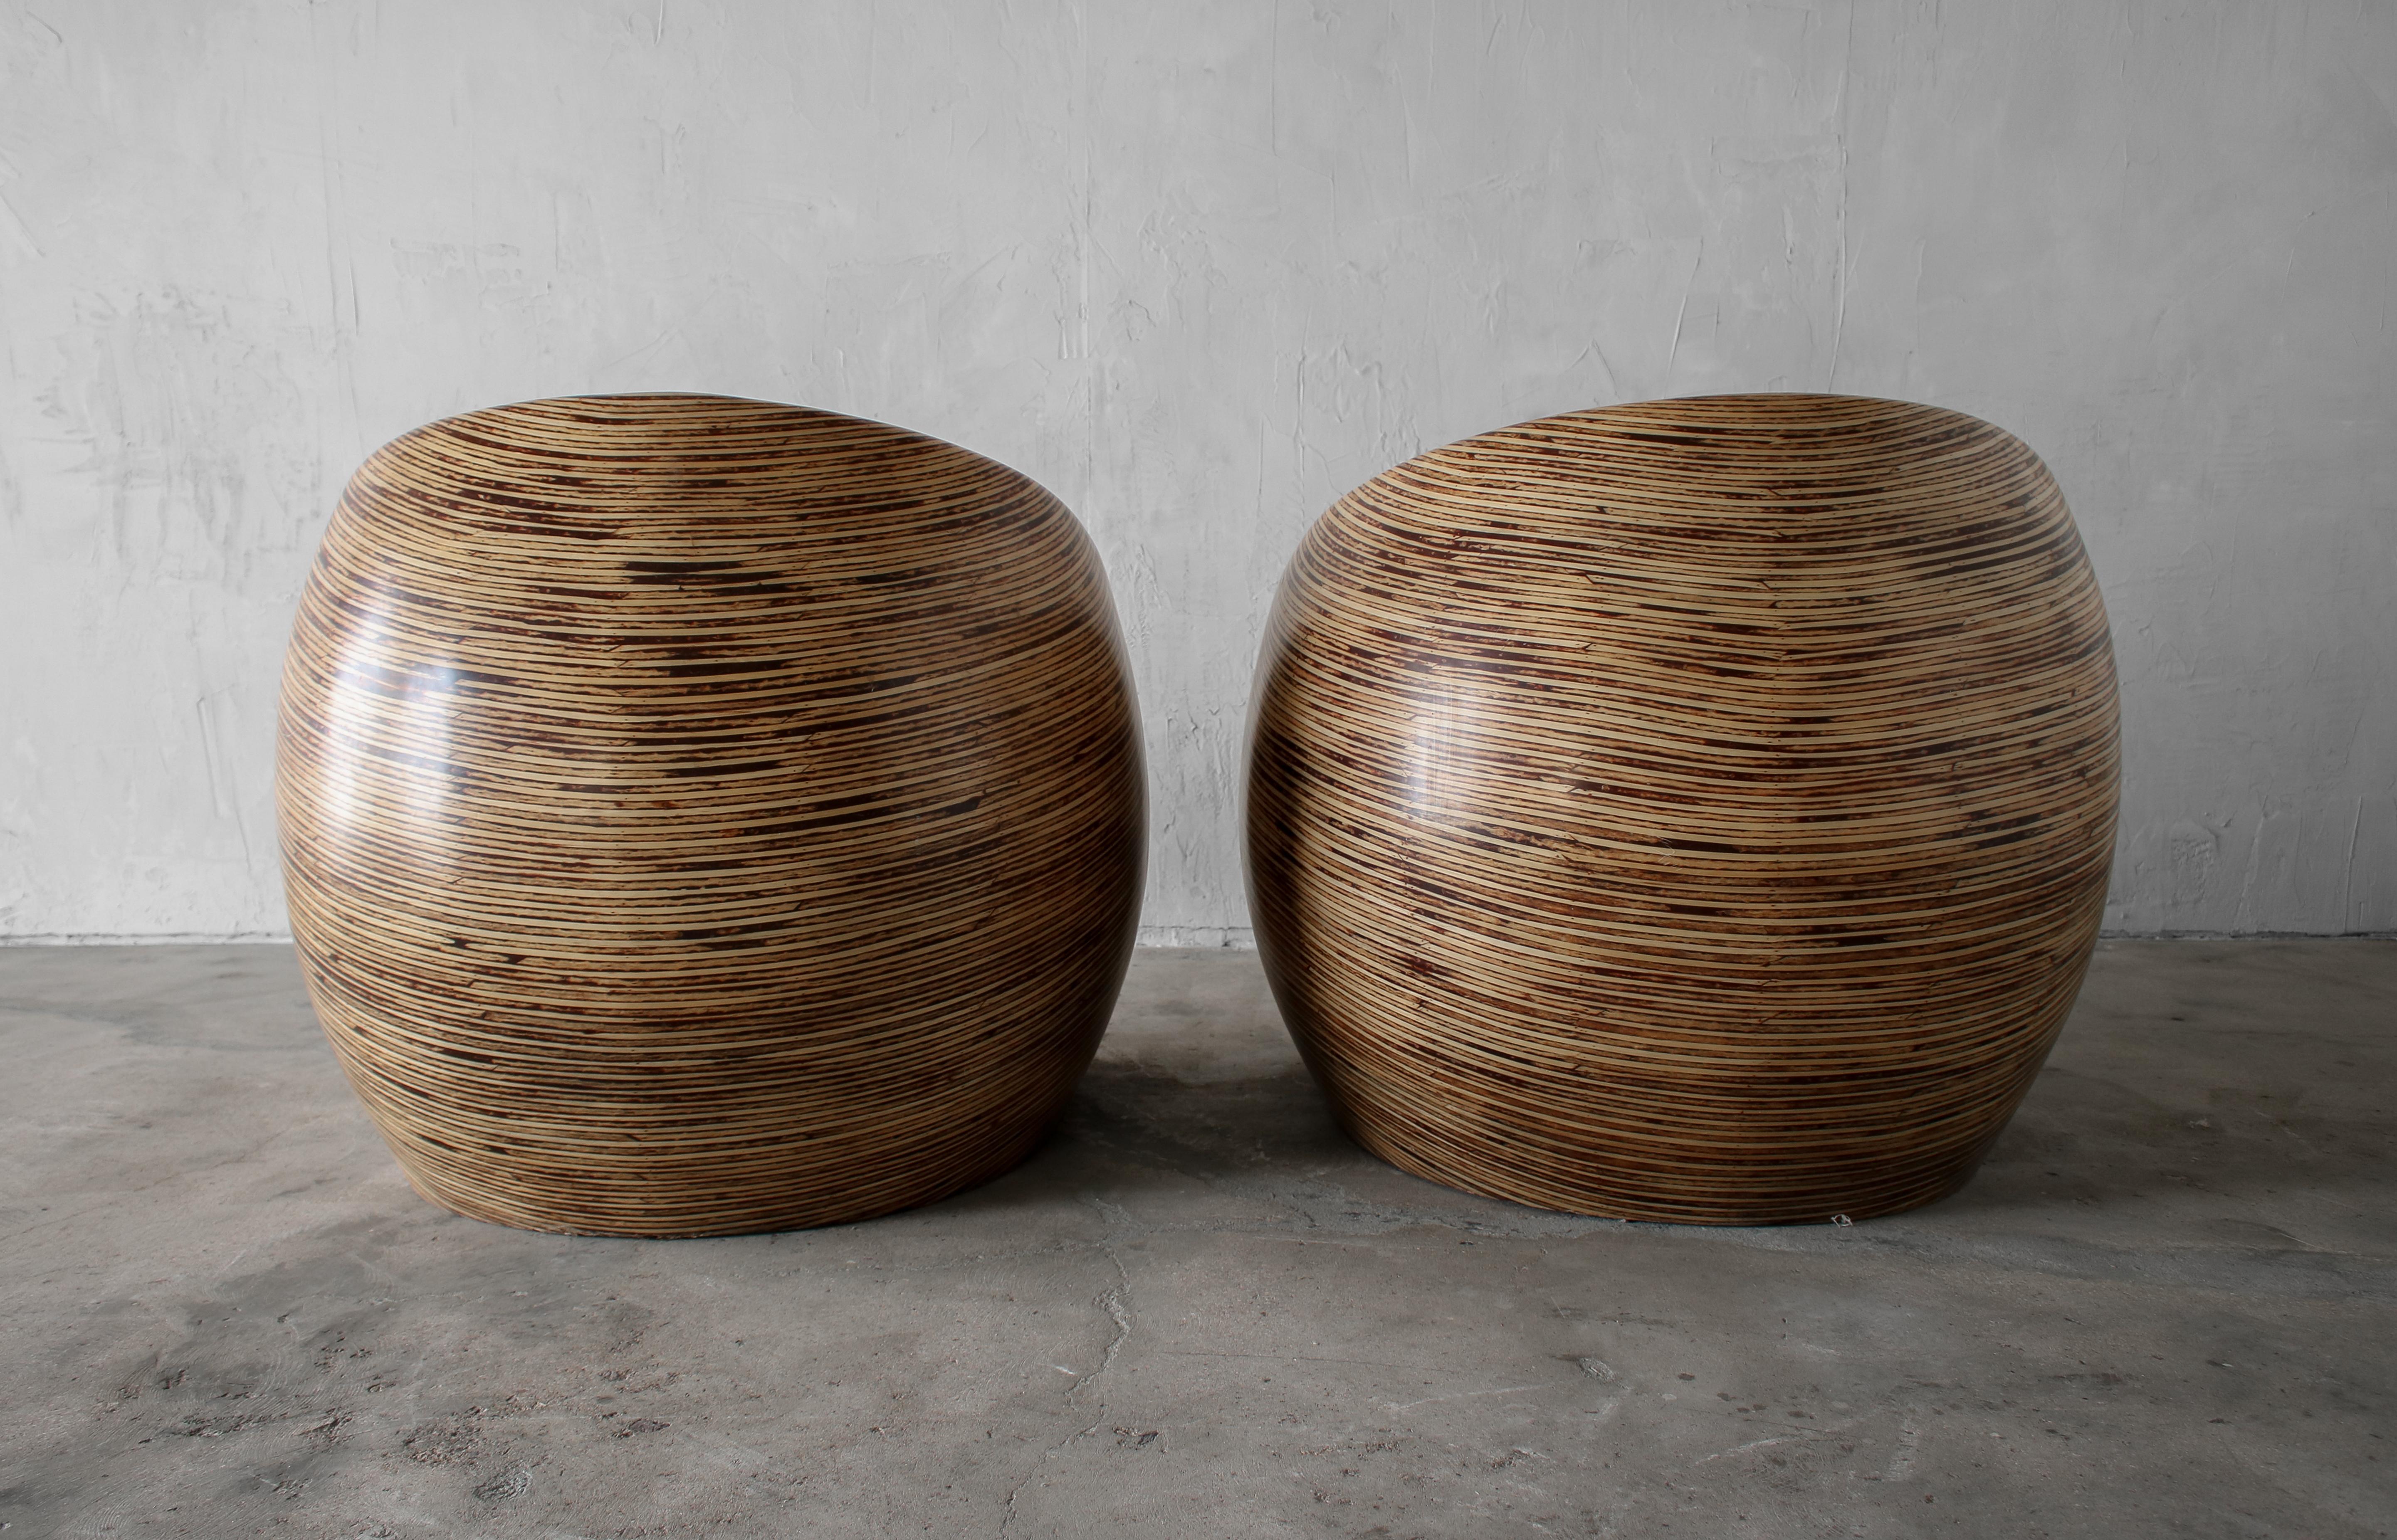 Minimalist Pair of Barrel Chairs by Clayton Tugunon for Snug